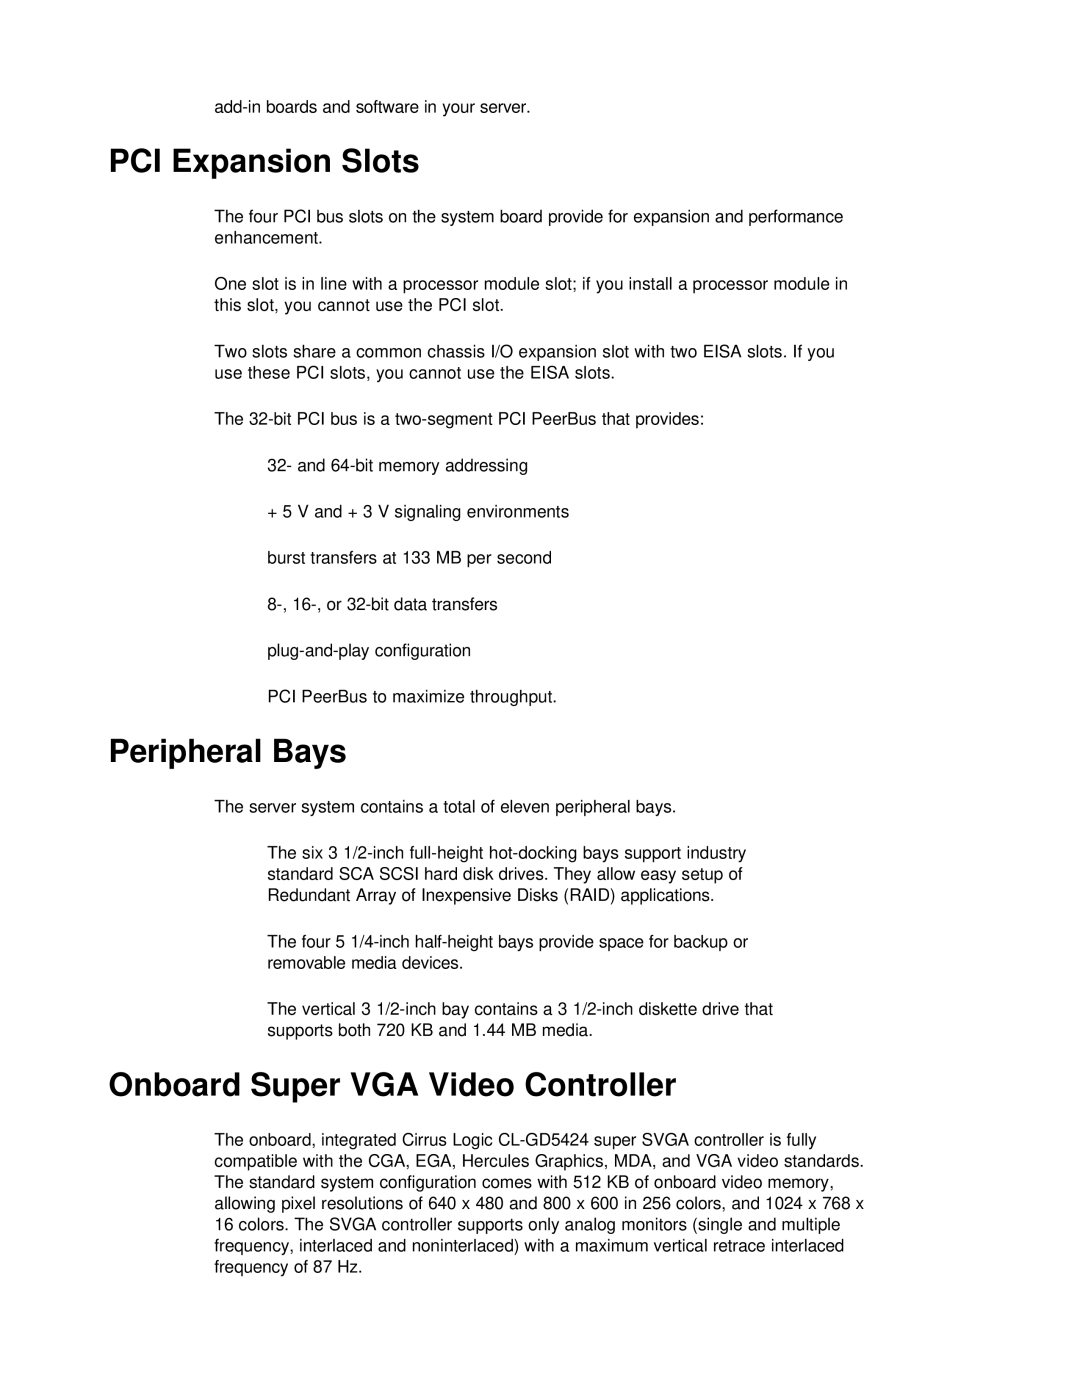 NEC PH133 manual PCI Expansion Slots, Peripheral Bays, Onboard Super VGA Video Controller 